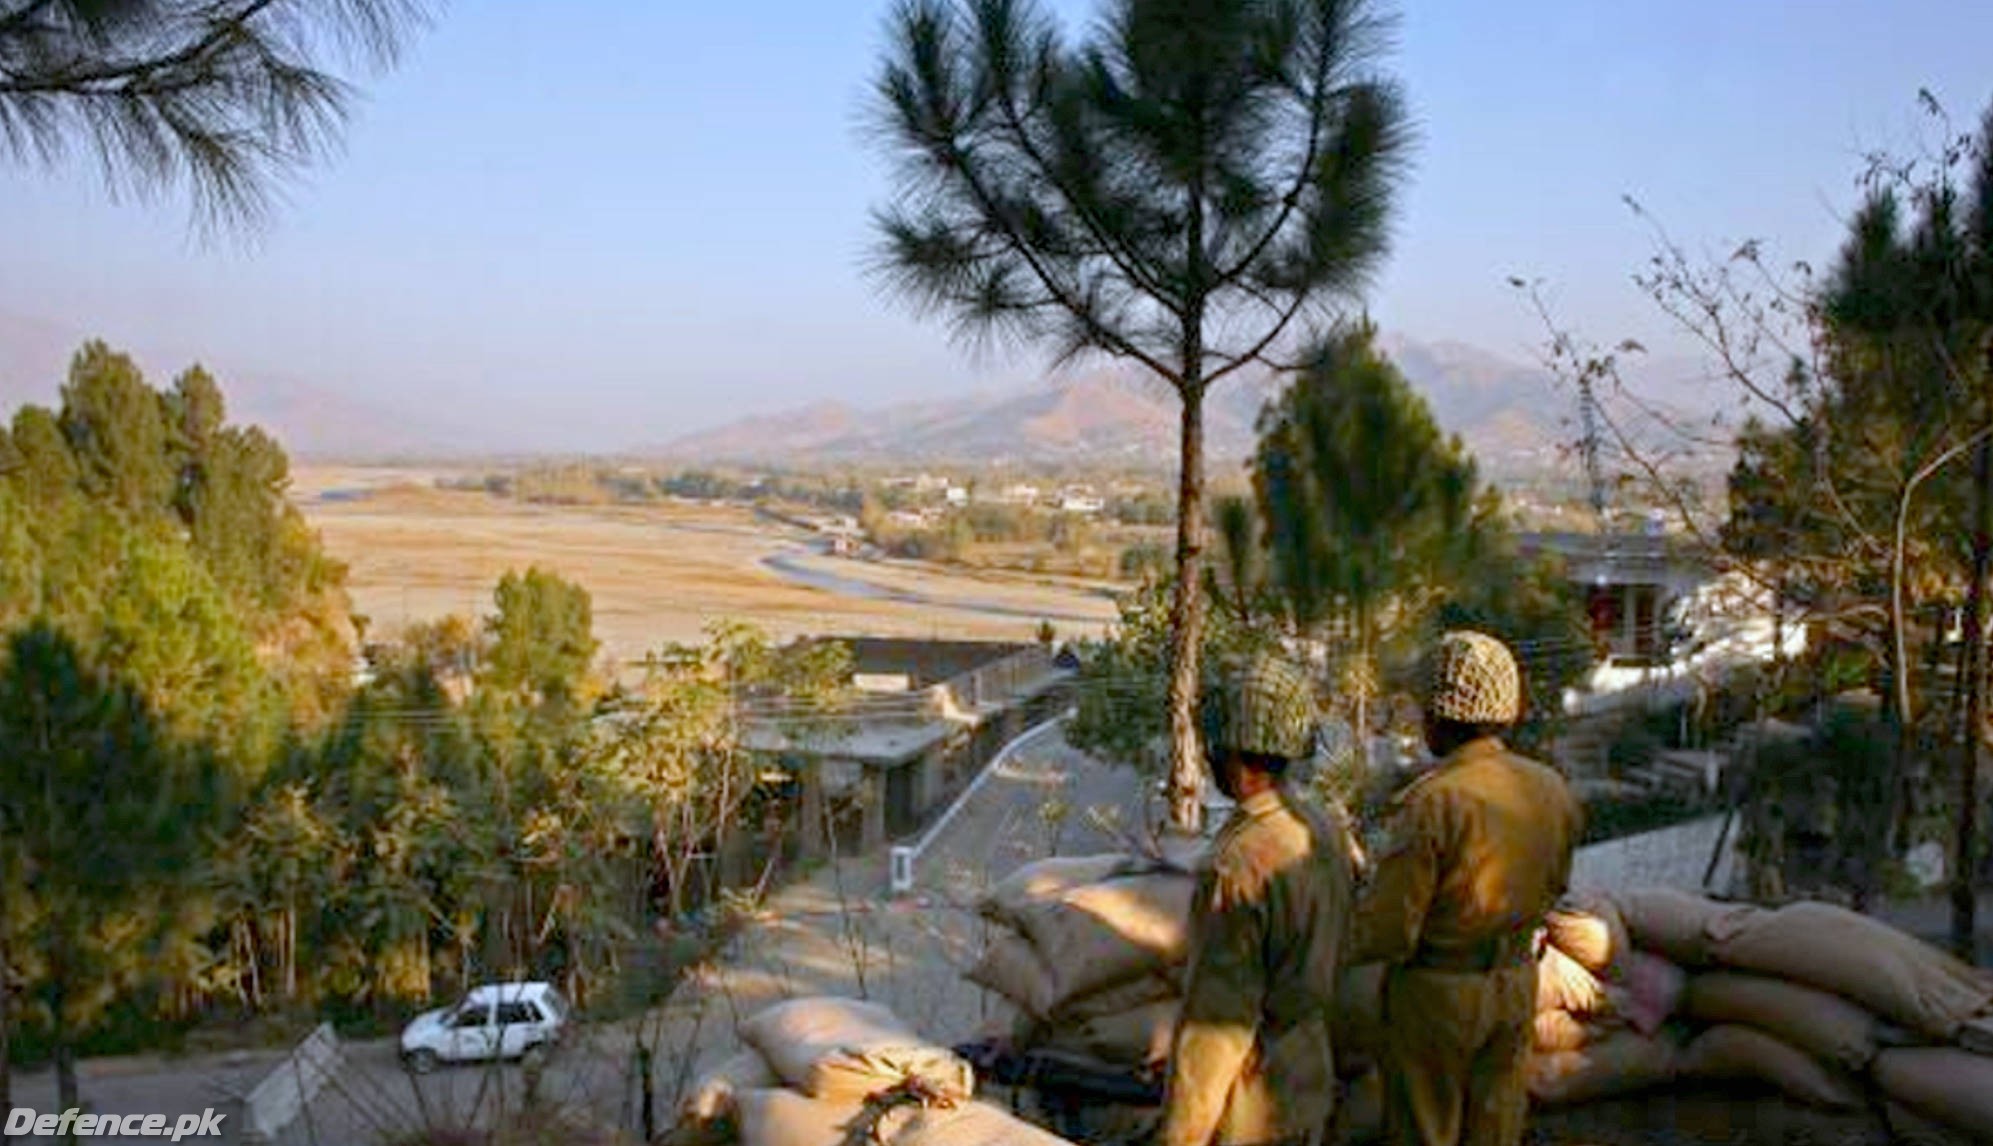 Pakistani Soldiers